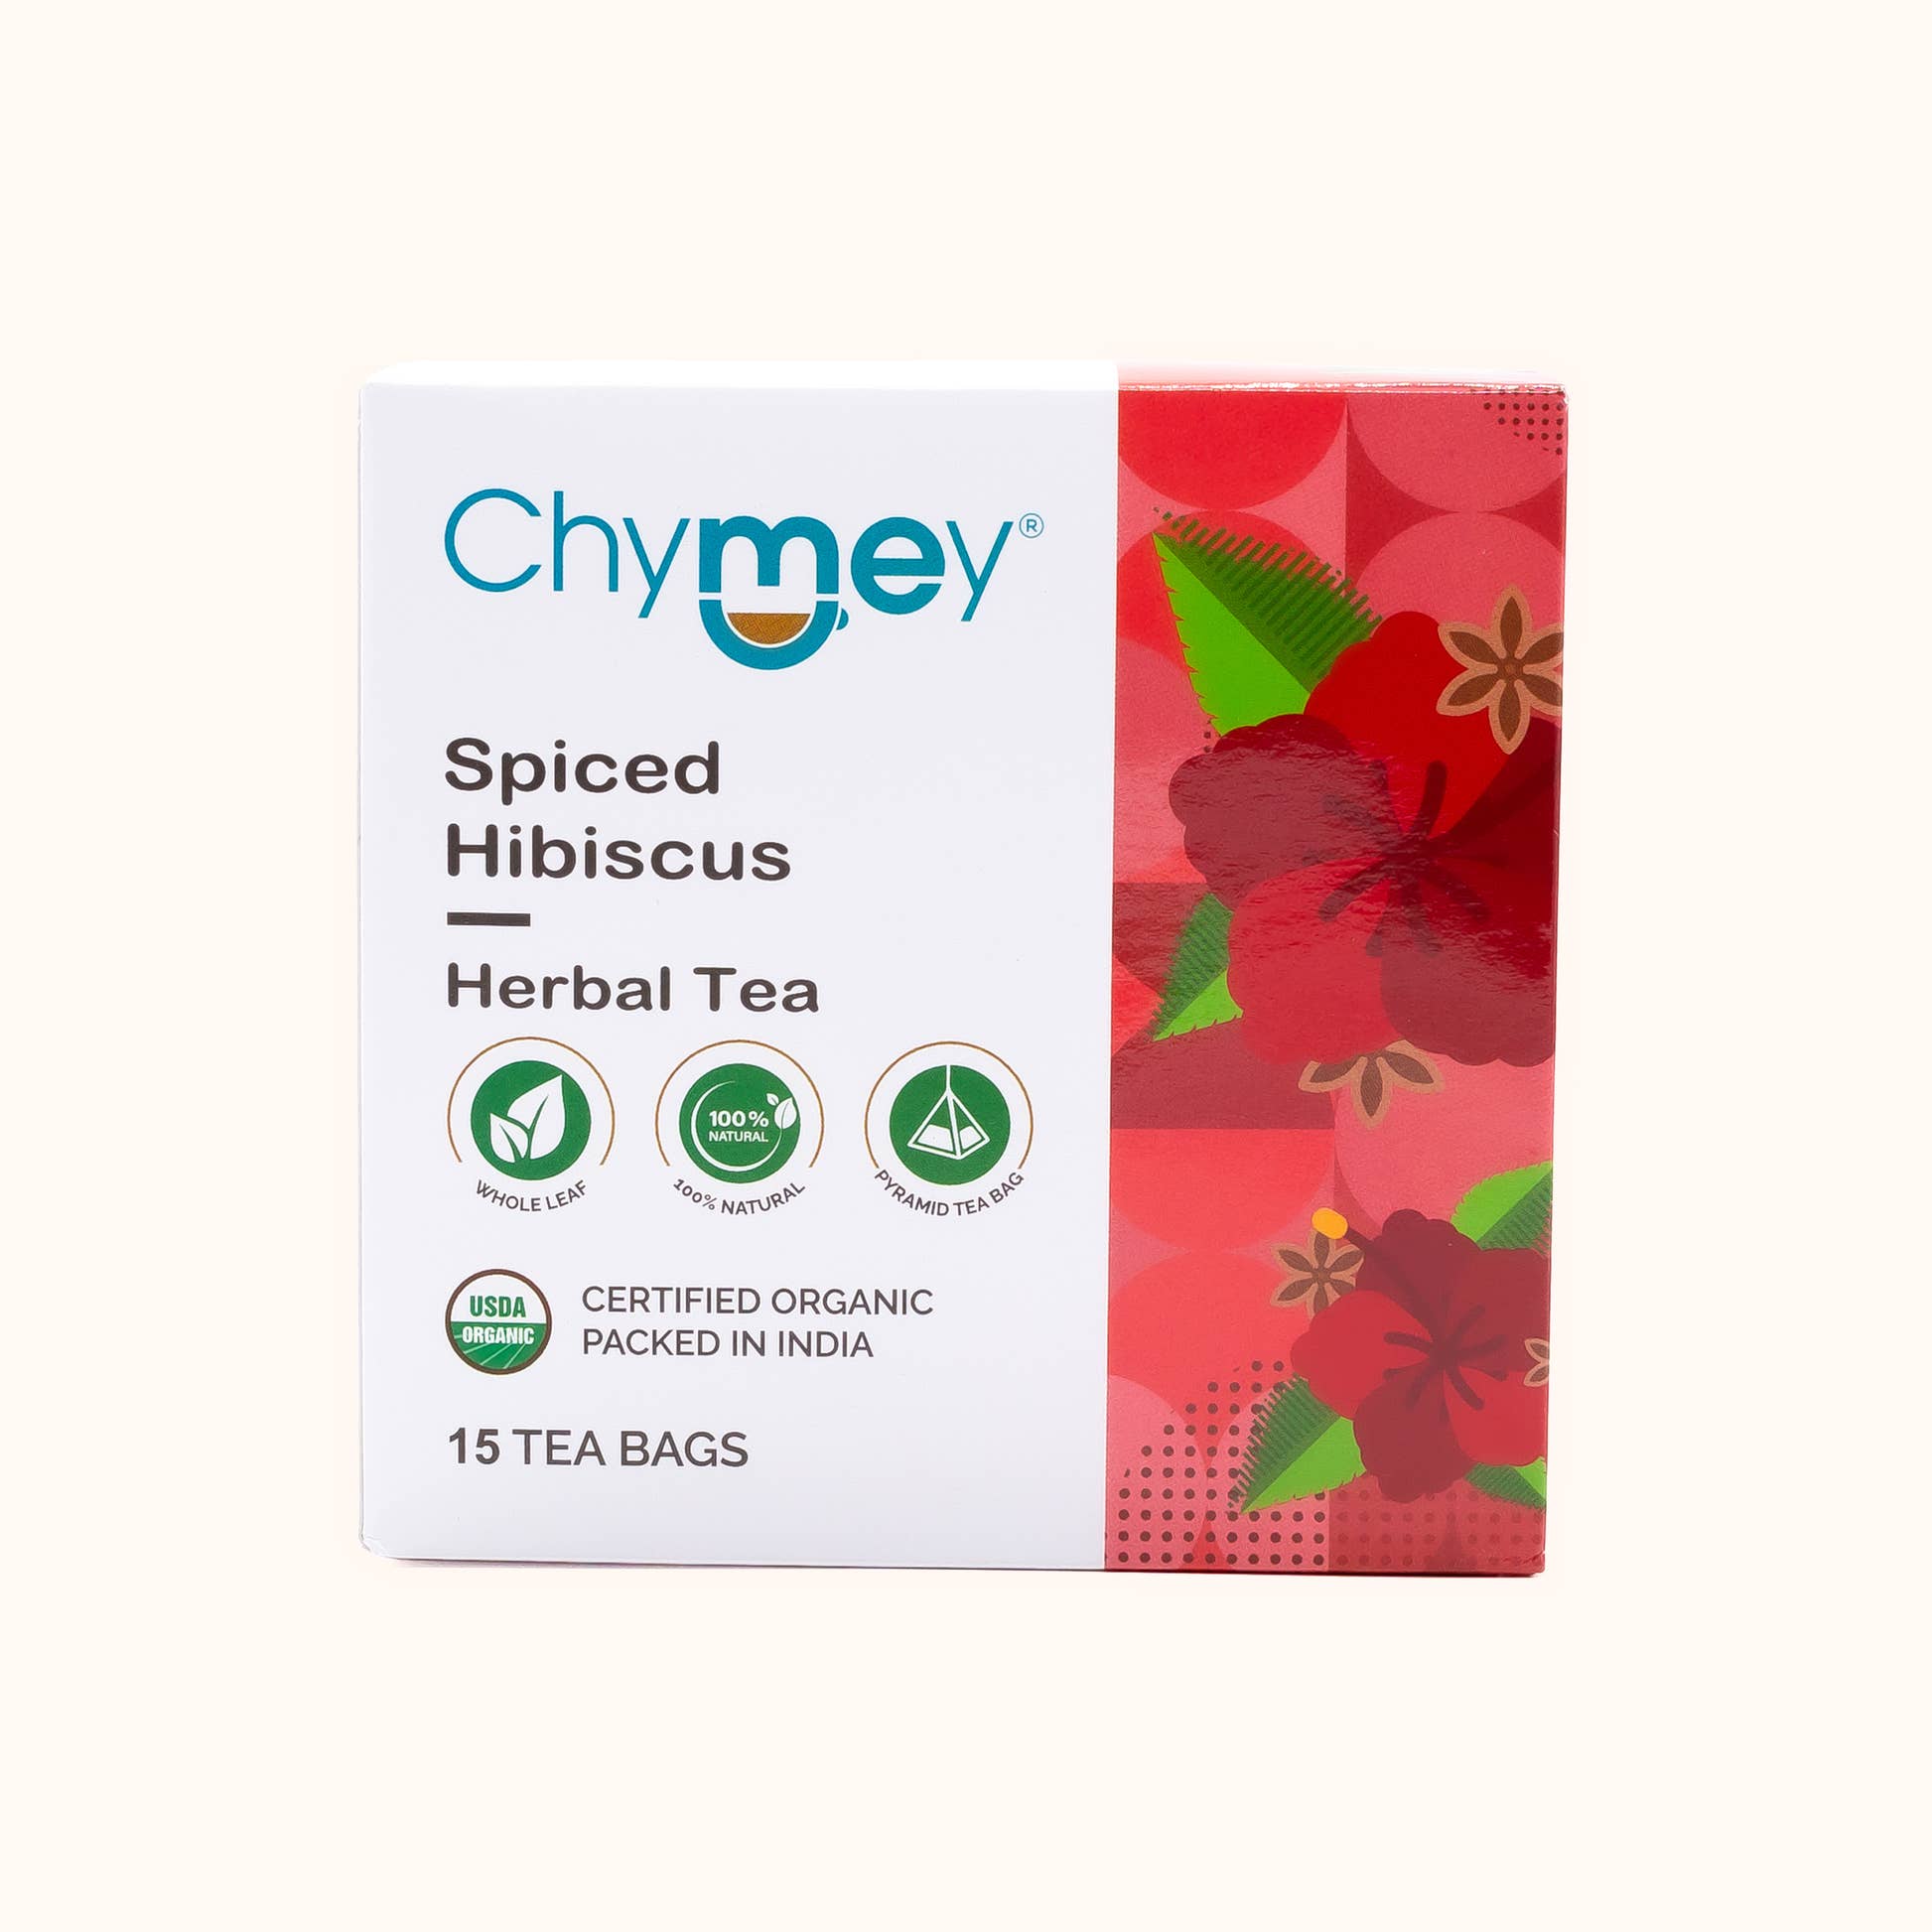 Spiced Hibiscus Herbal Tea by Chymey tea box